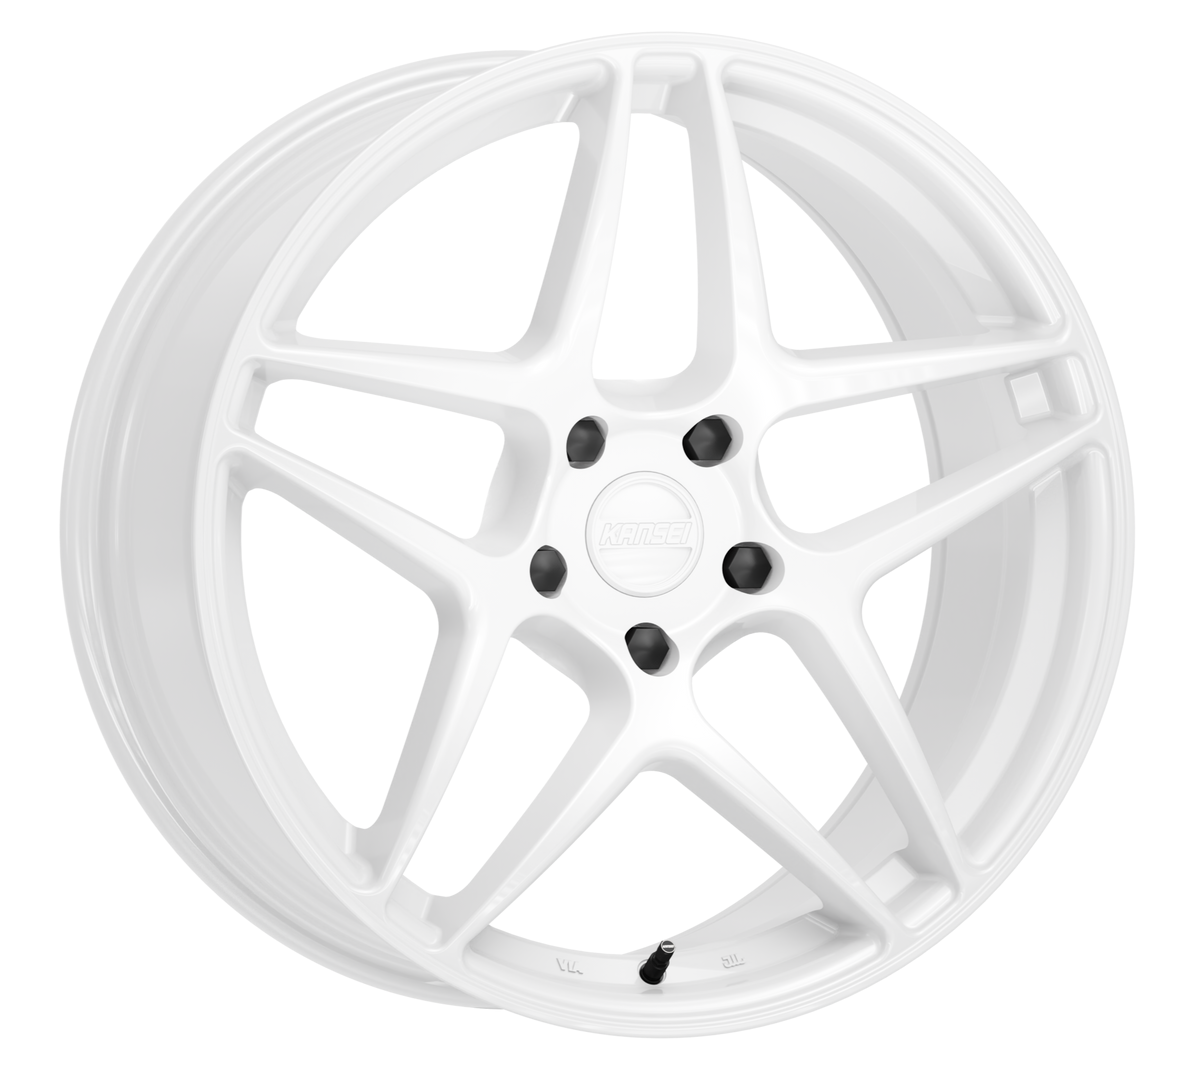 K15W ASTRO Wheel, Size: 18" x 9.50", Bolt Pattern: 5 x 114.300 mm, Backspace: 6.63" [Finish: Gloss White]